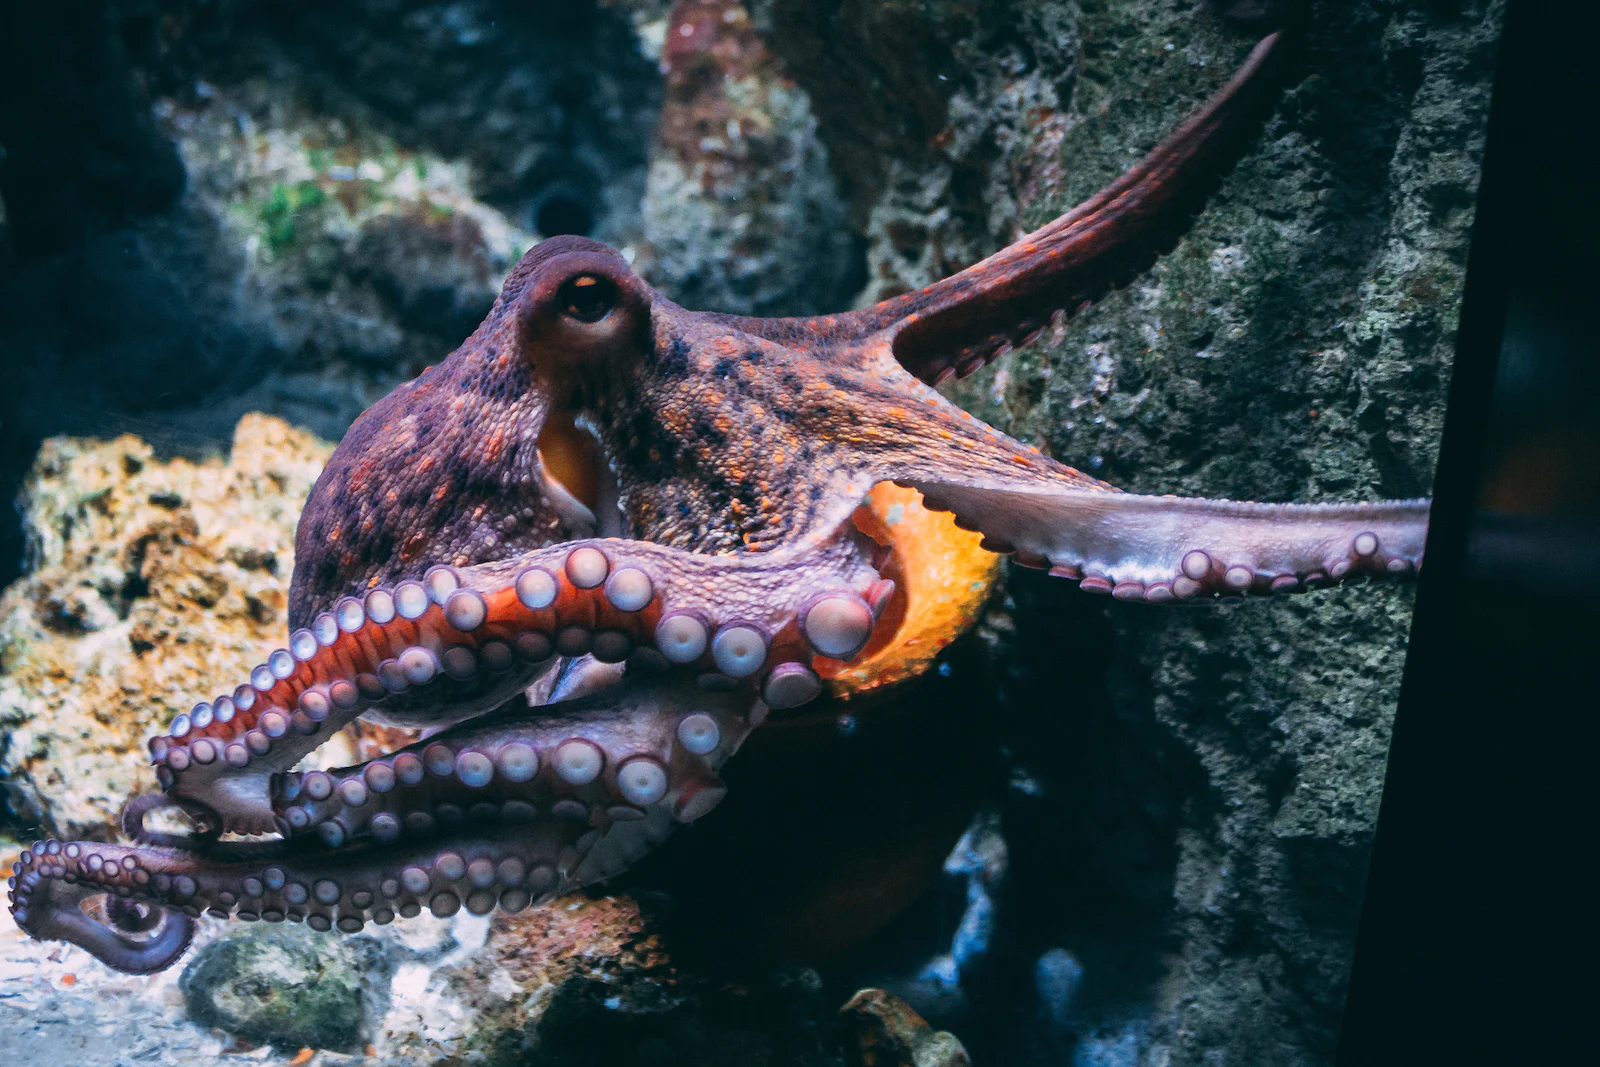 Octopus fishing season lower than average in Progreso, Yucatán - The  Yucatan Times